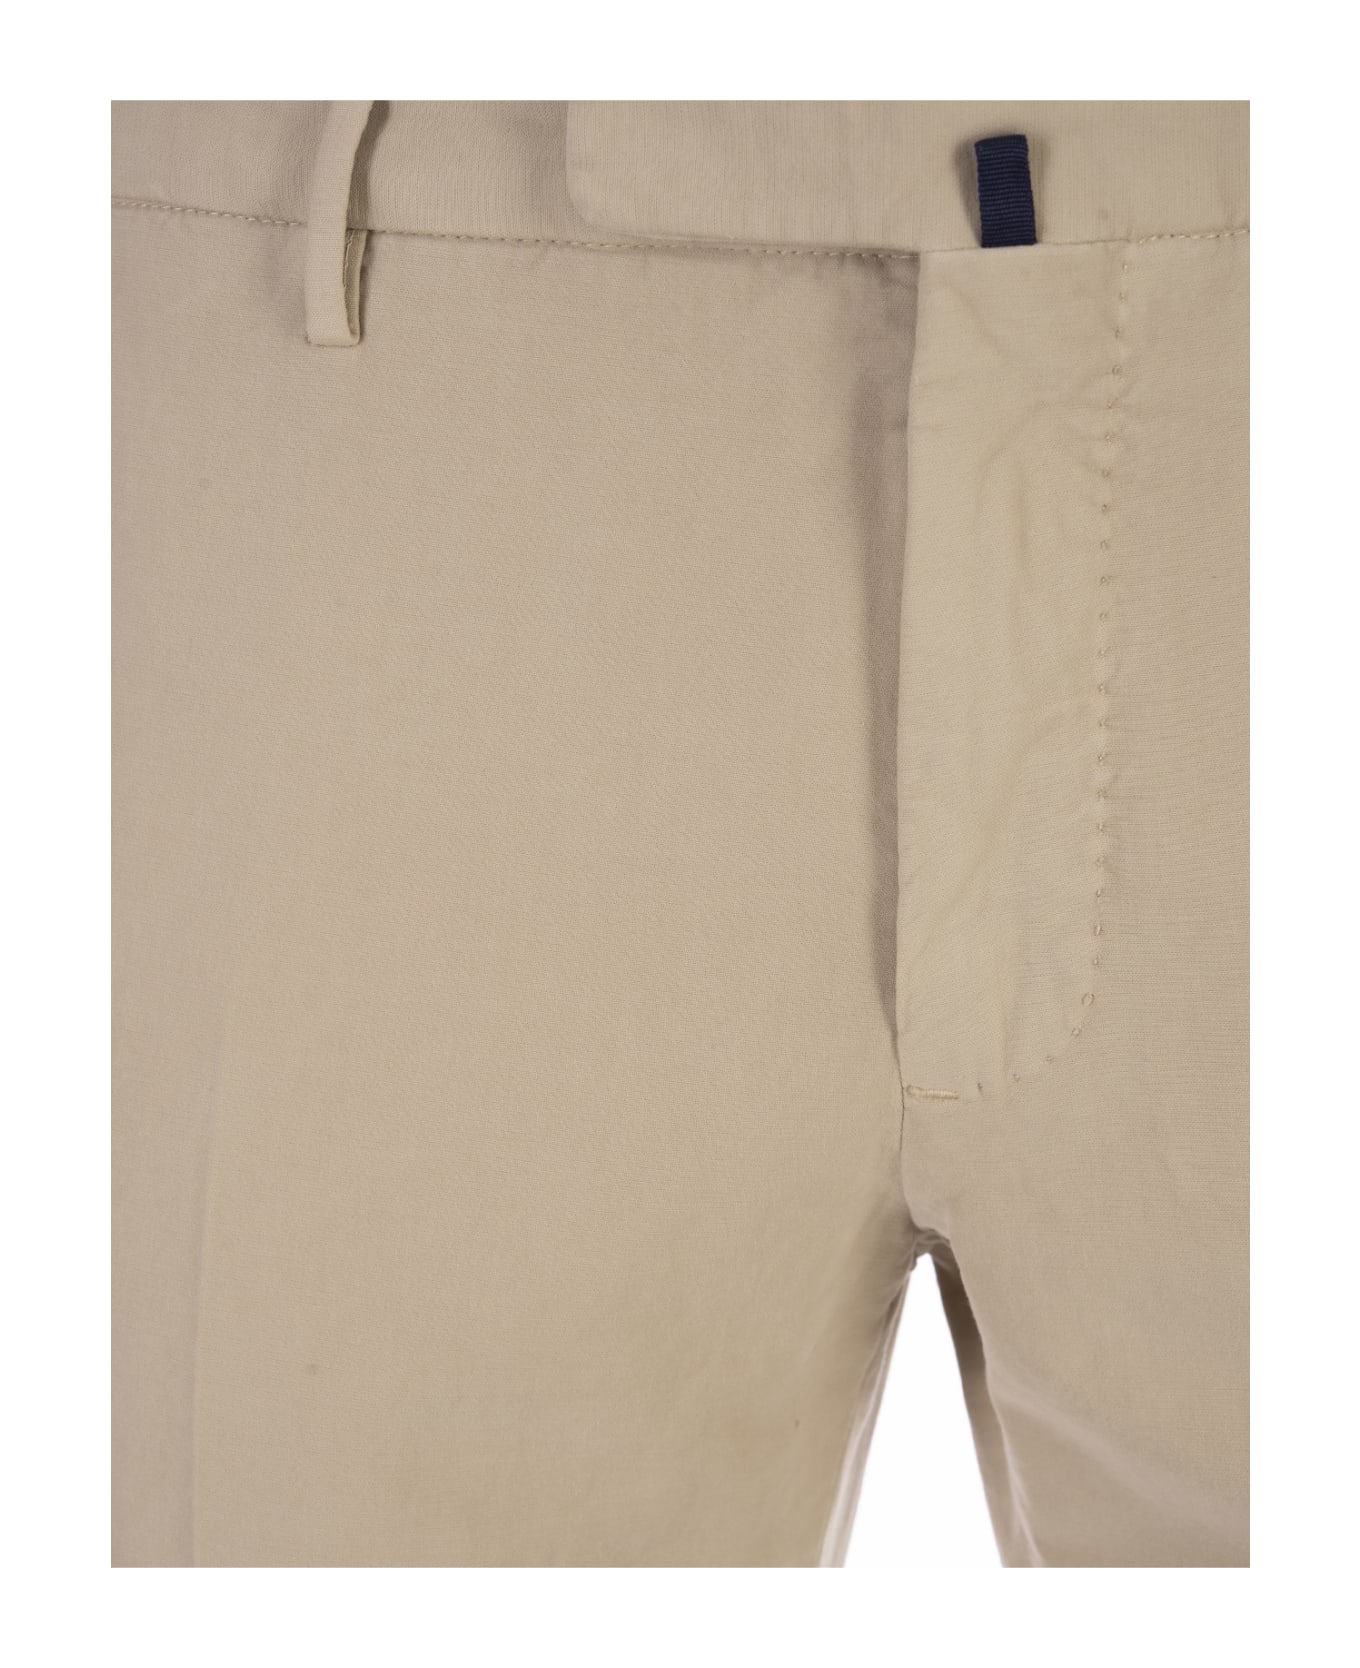 Incotex Slim Fit Trousers In Beige Certified Doeskin - Brown ボトムス